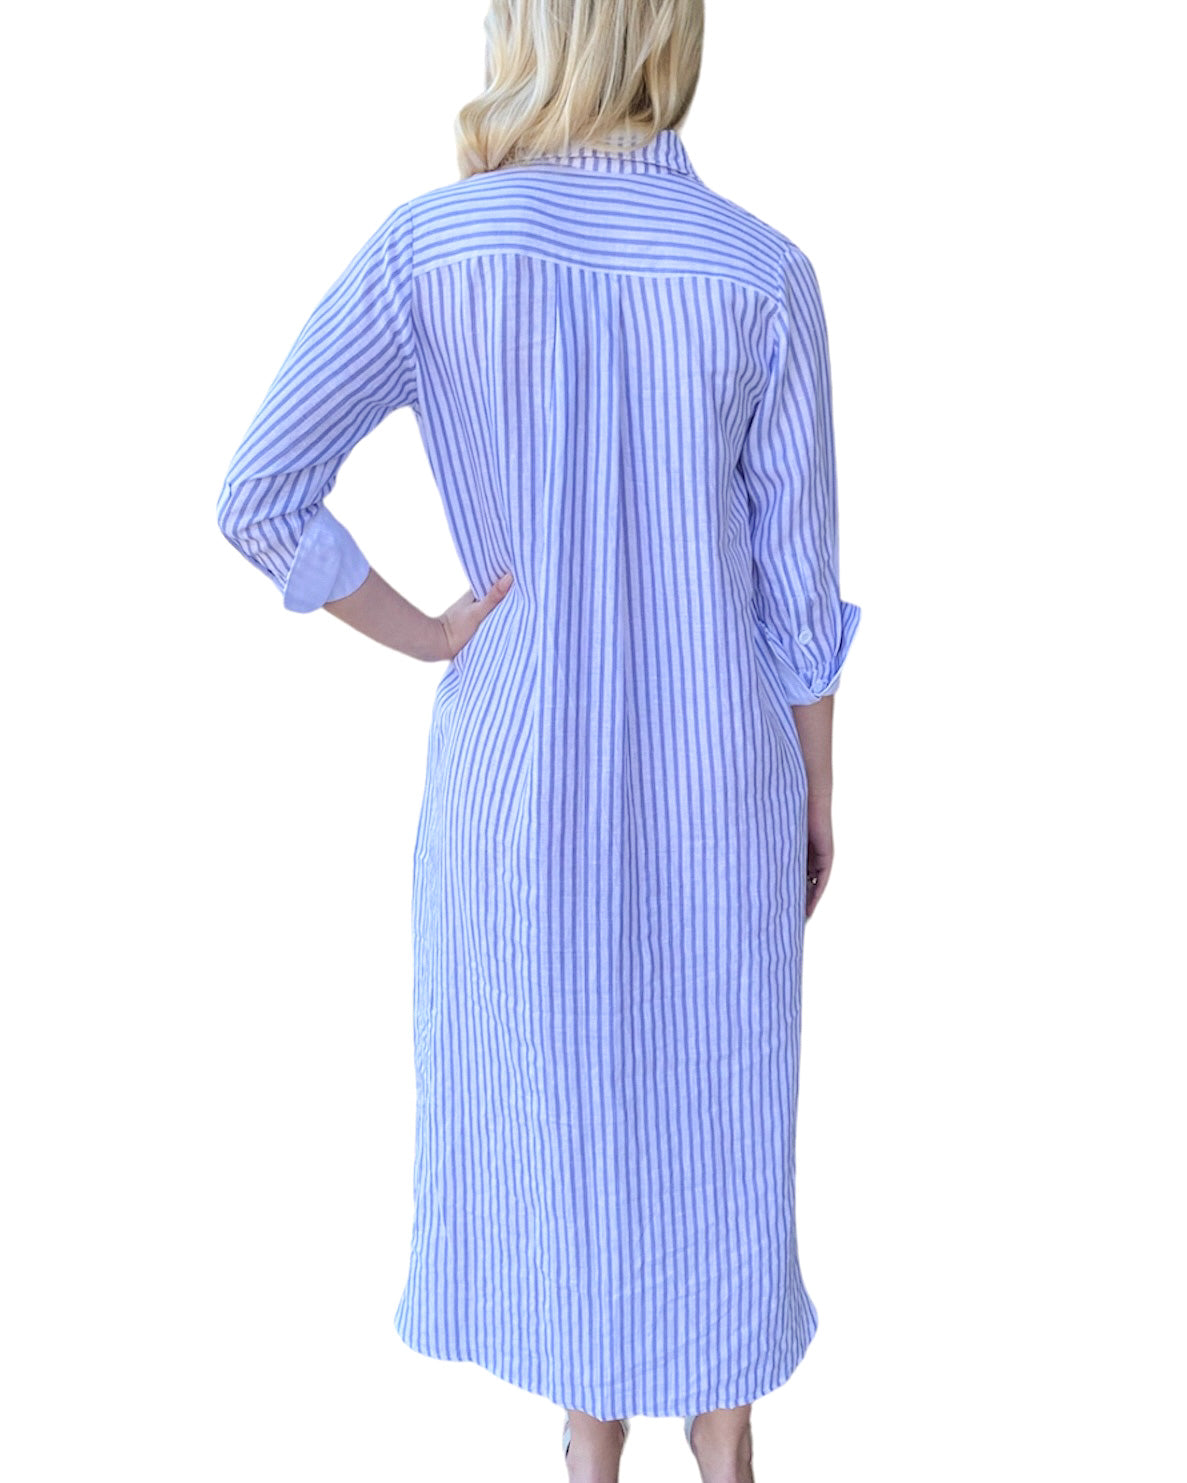 STEVIE DRESS - Blue Stripes